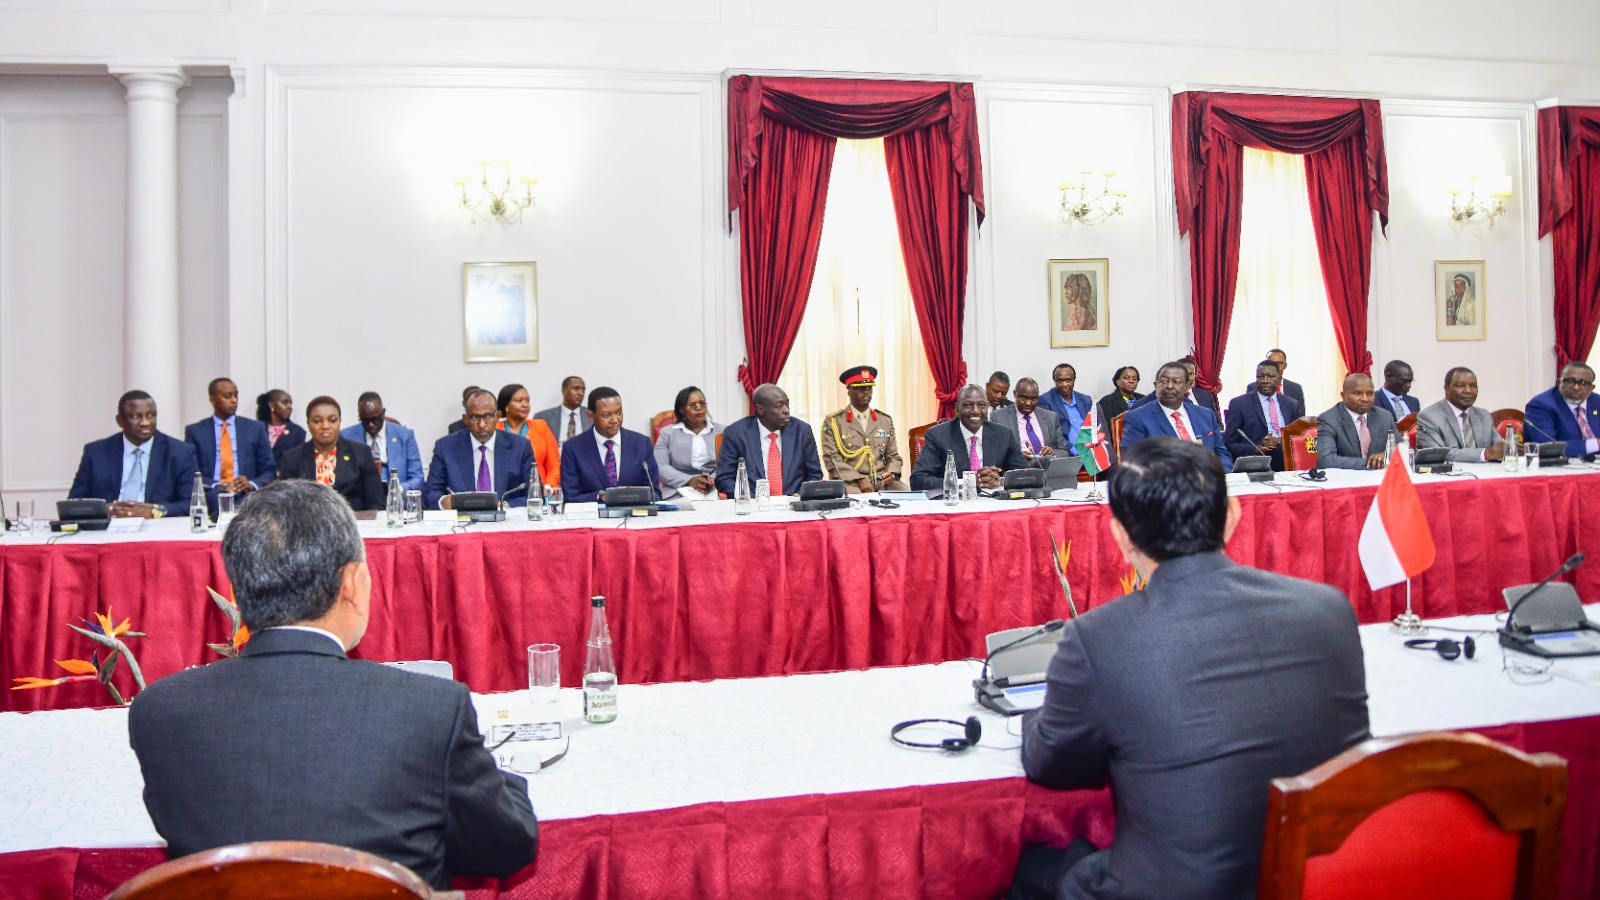 President William Ruto and The President of Indonesia Joko Widodo witnessed memoranda signing that seeks to open opportunities in various economic sectors.